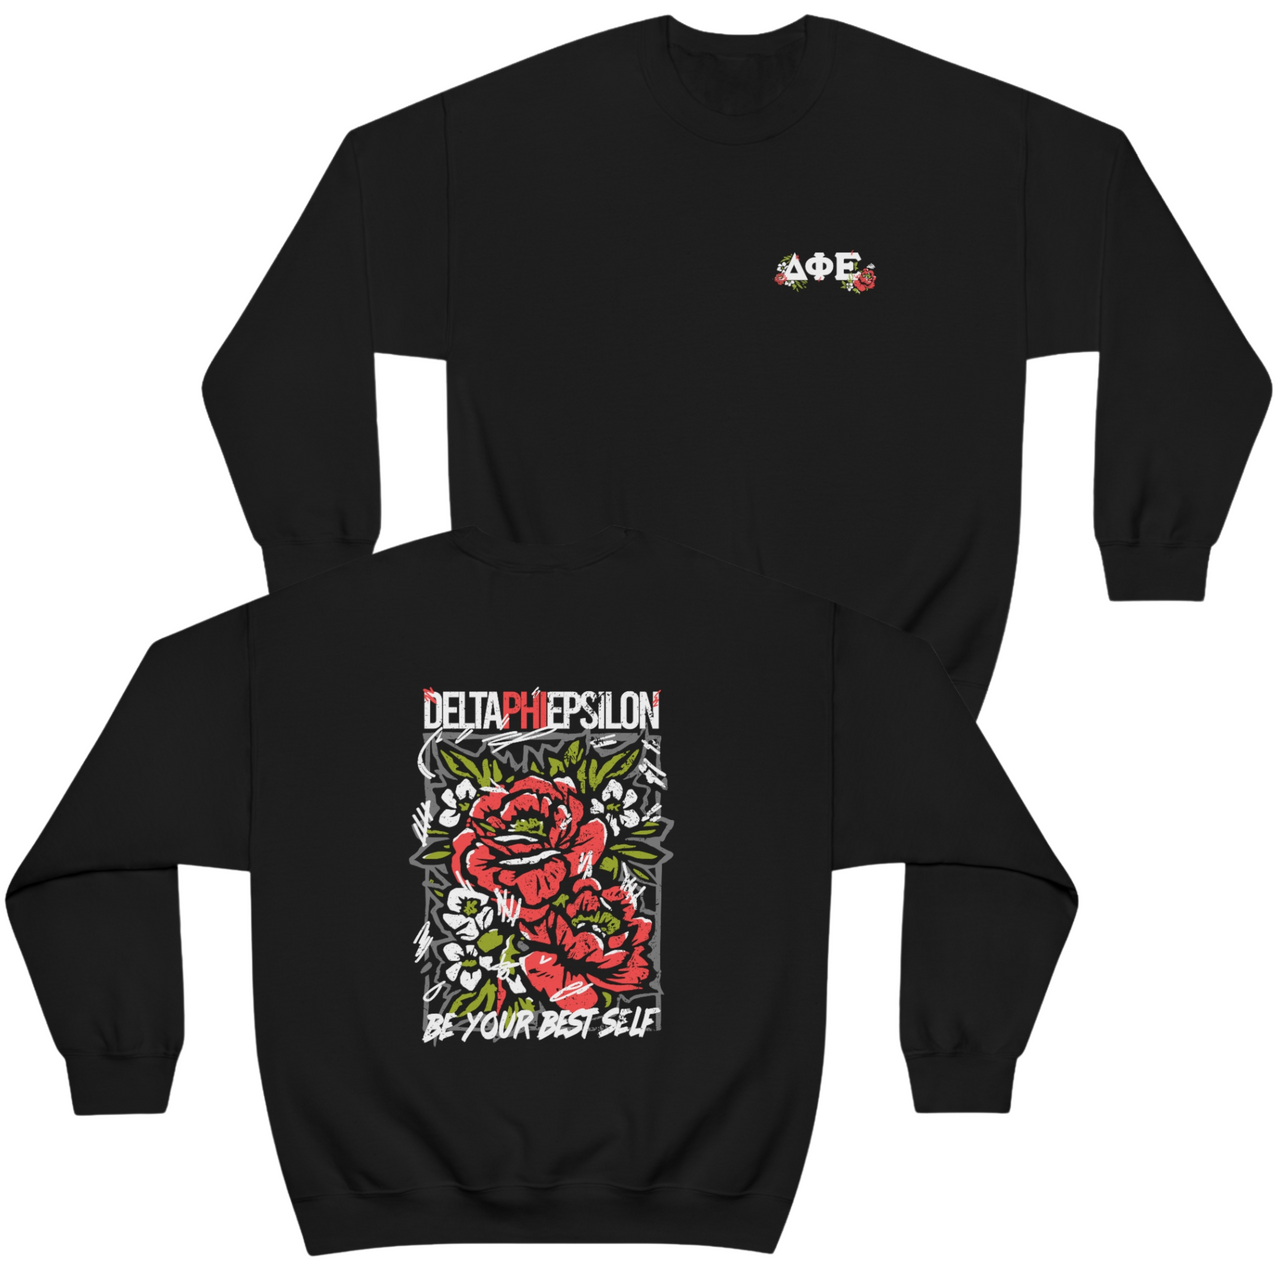 Delta Phi Epsilon Graphic Crewneck Sweatshirt | Grunge Roses